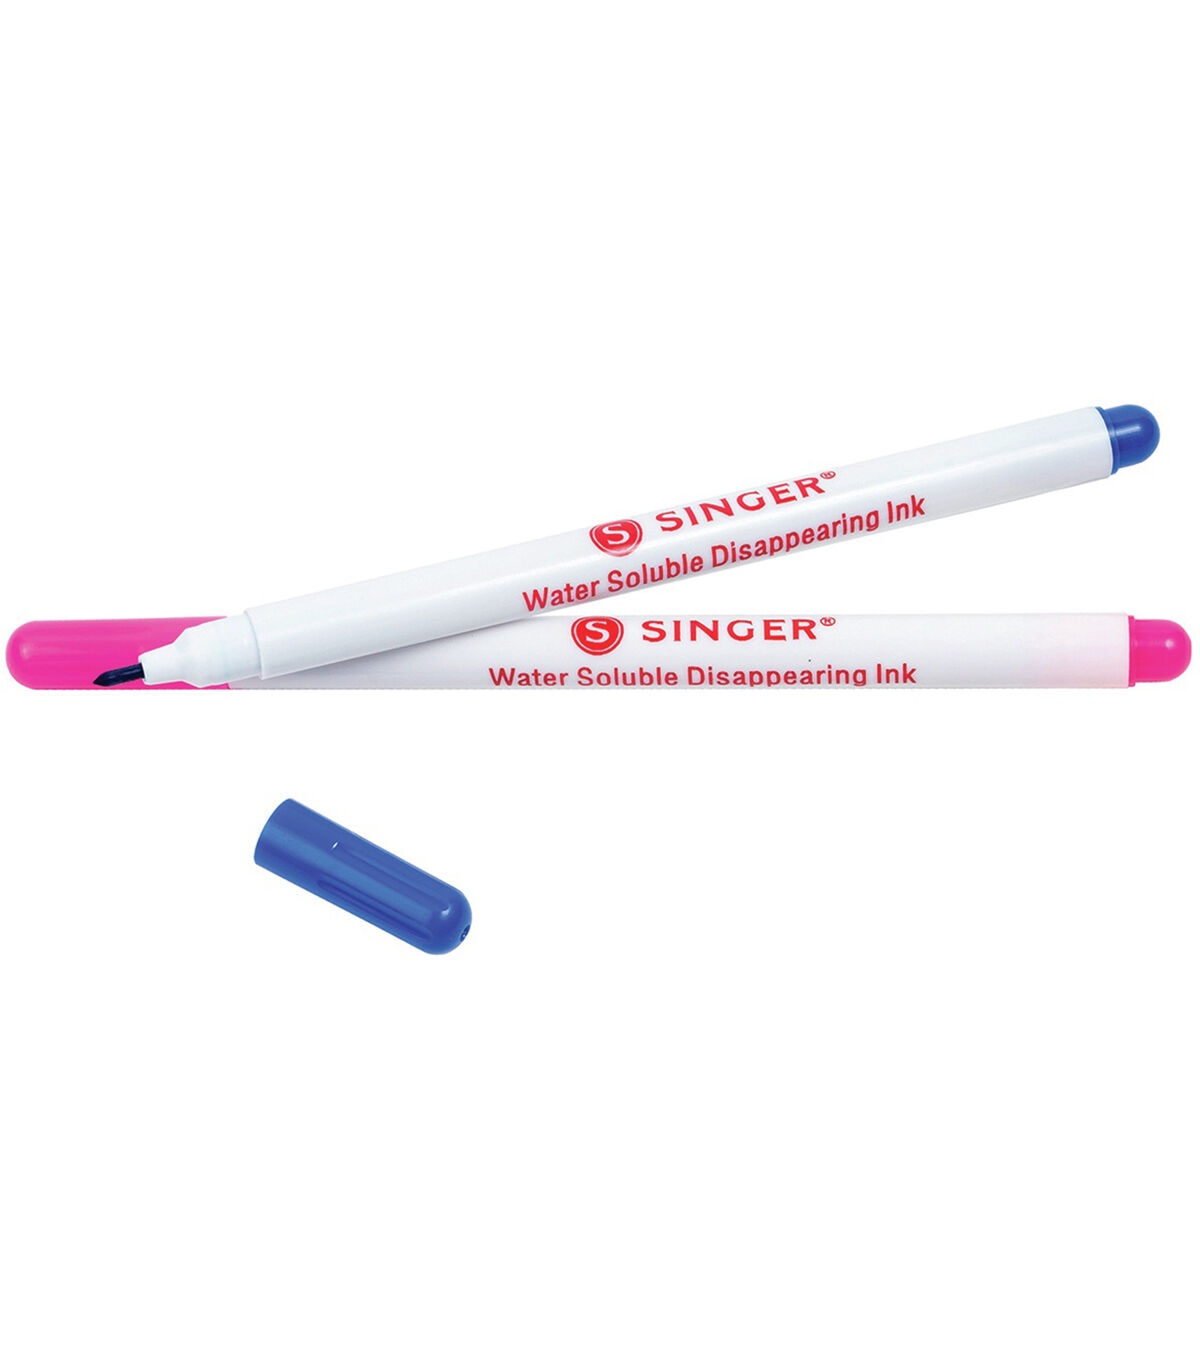 Singer QuiltPro Disappearing Fabric Marking Pens - Fine-Pink & Blue 2-Pkg